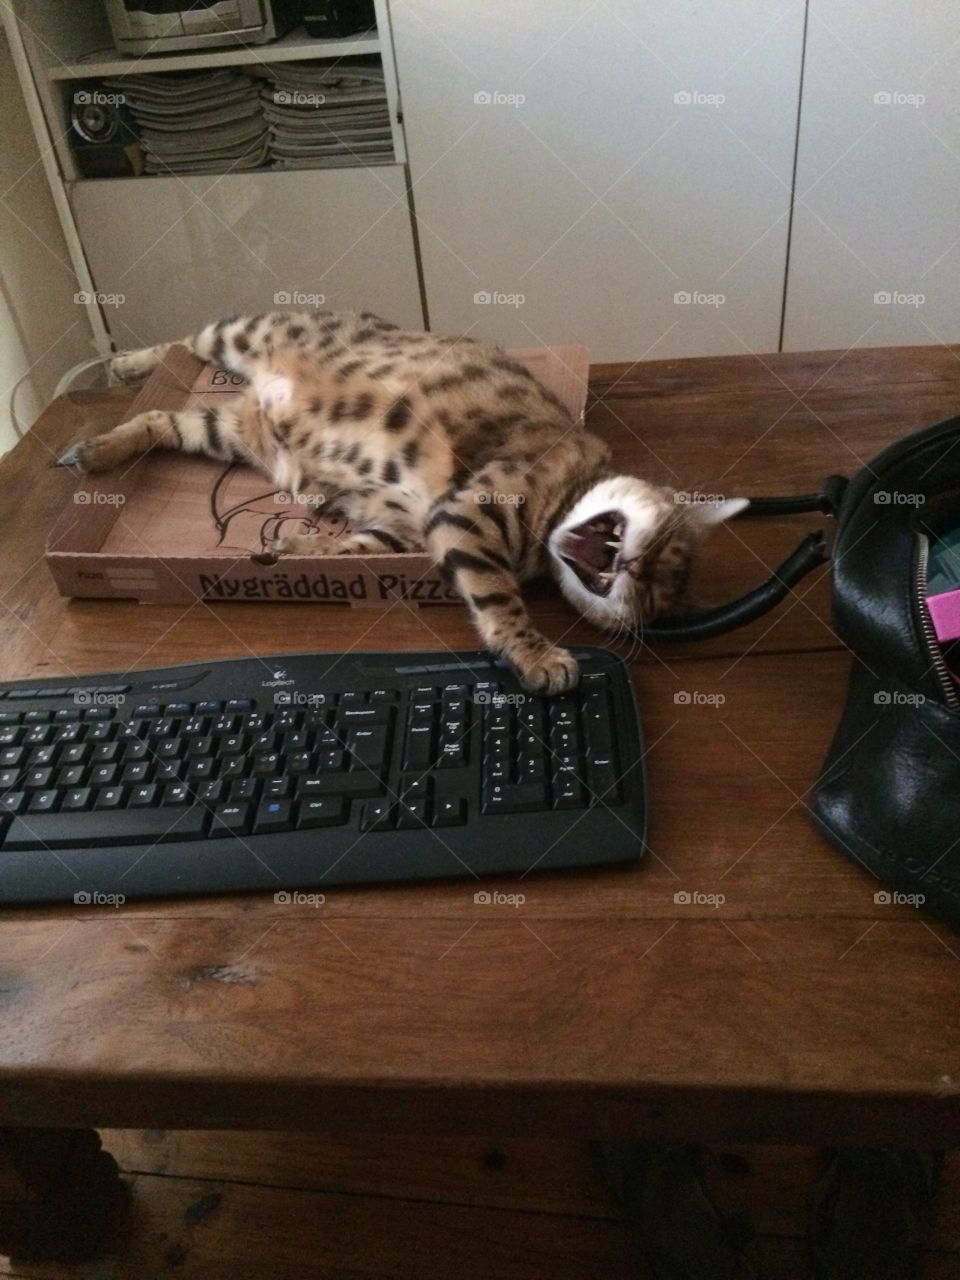 #bengalcat #maggiethecat #cats #havingfun #keyboard #computerexpert #pizzabox #onthetable